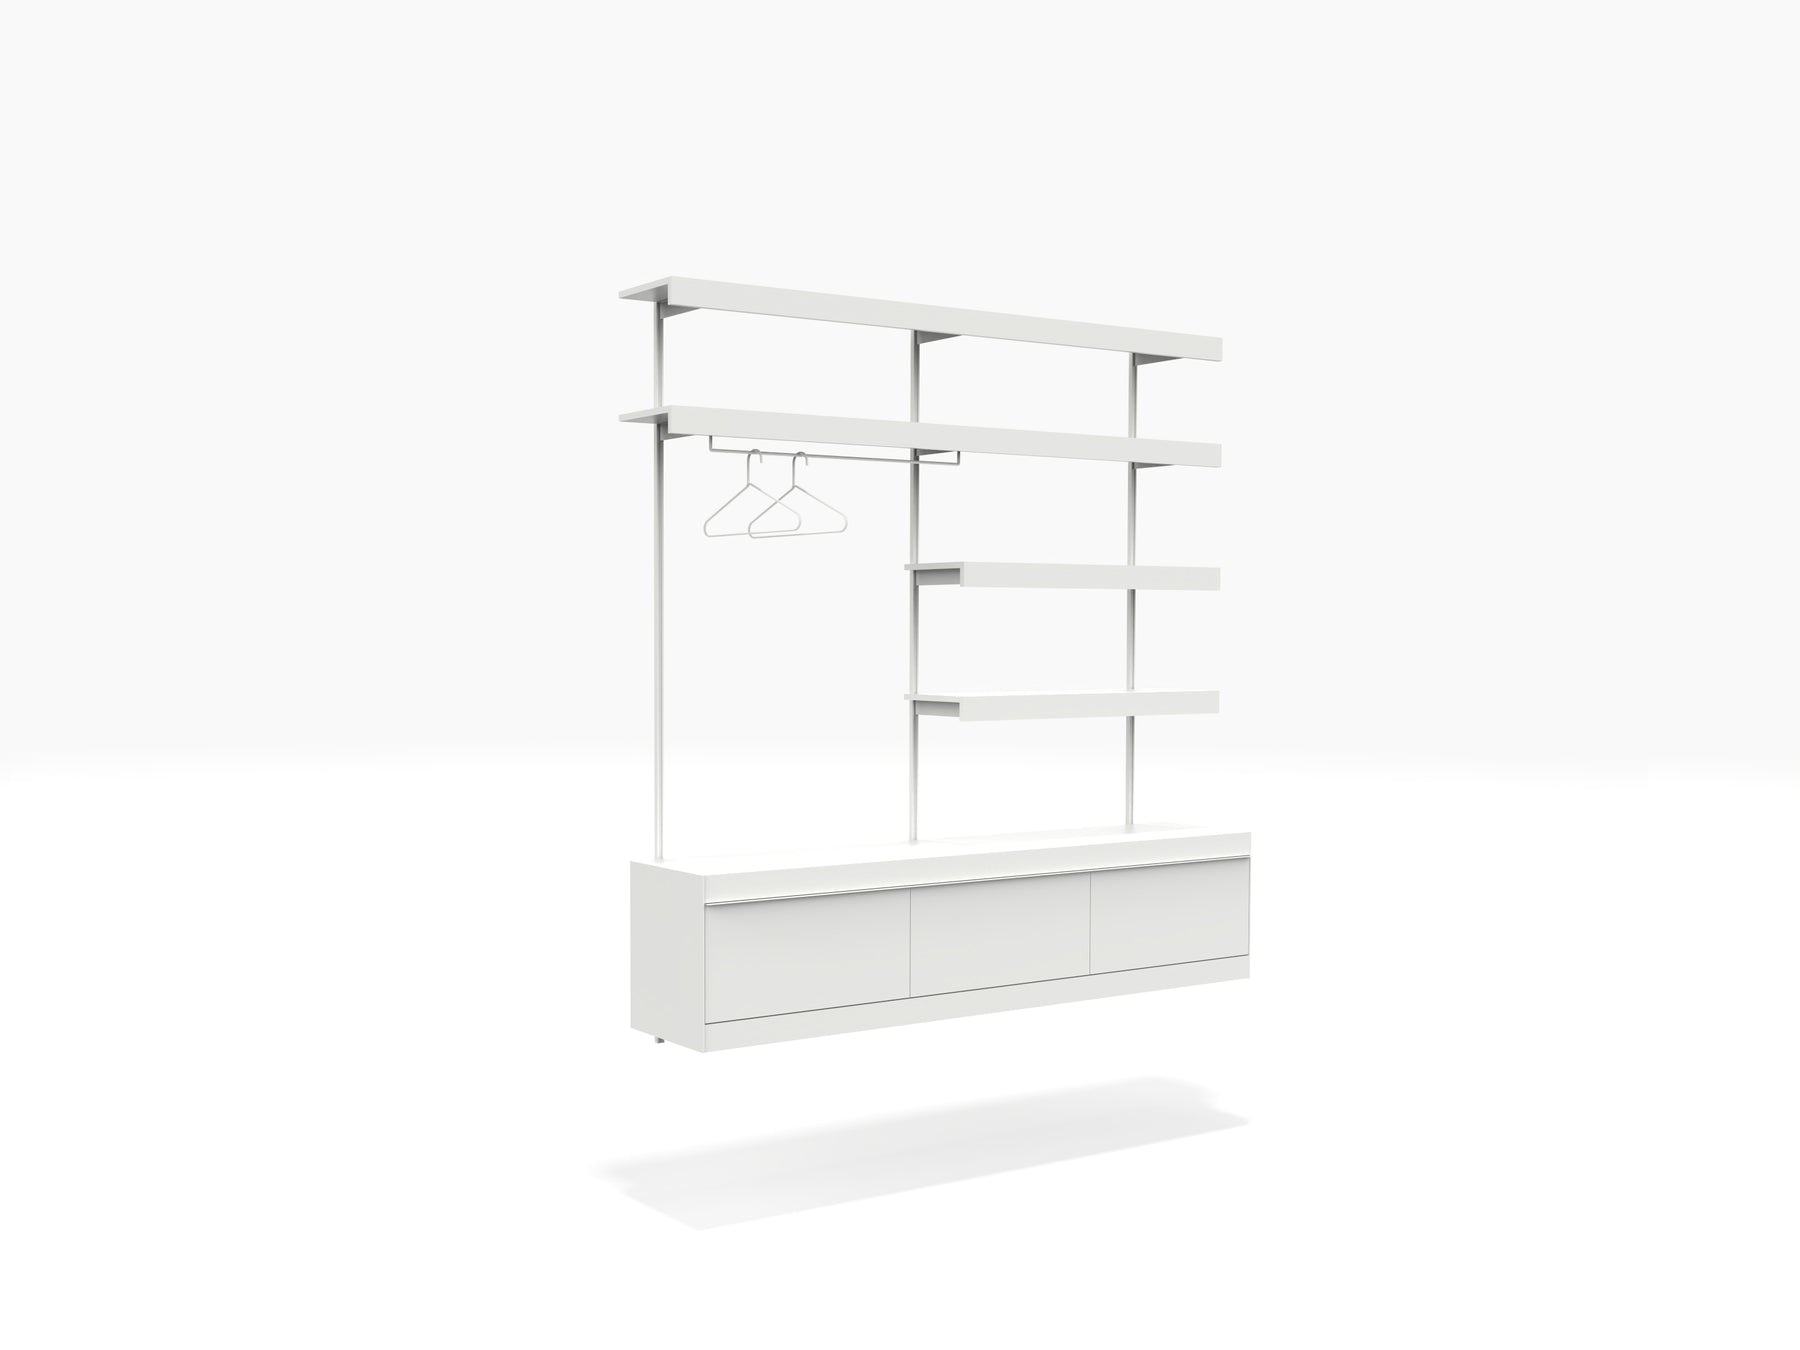 walk-in wardrobe storage system wall mounted in white